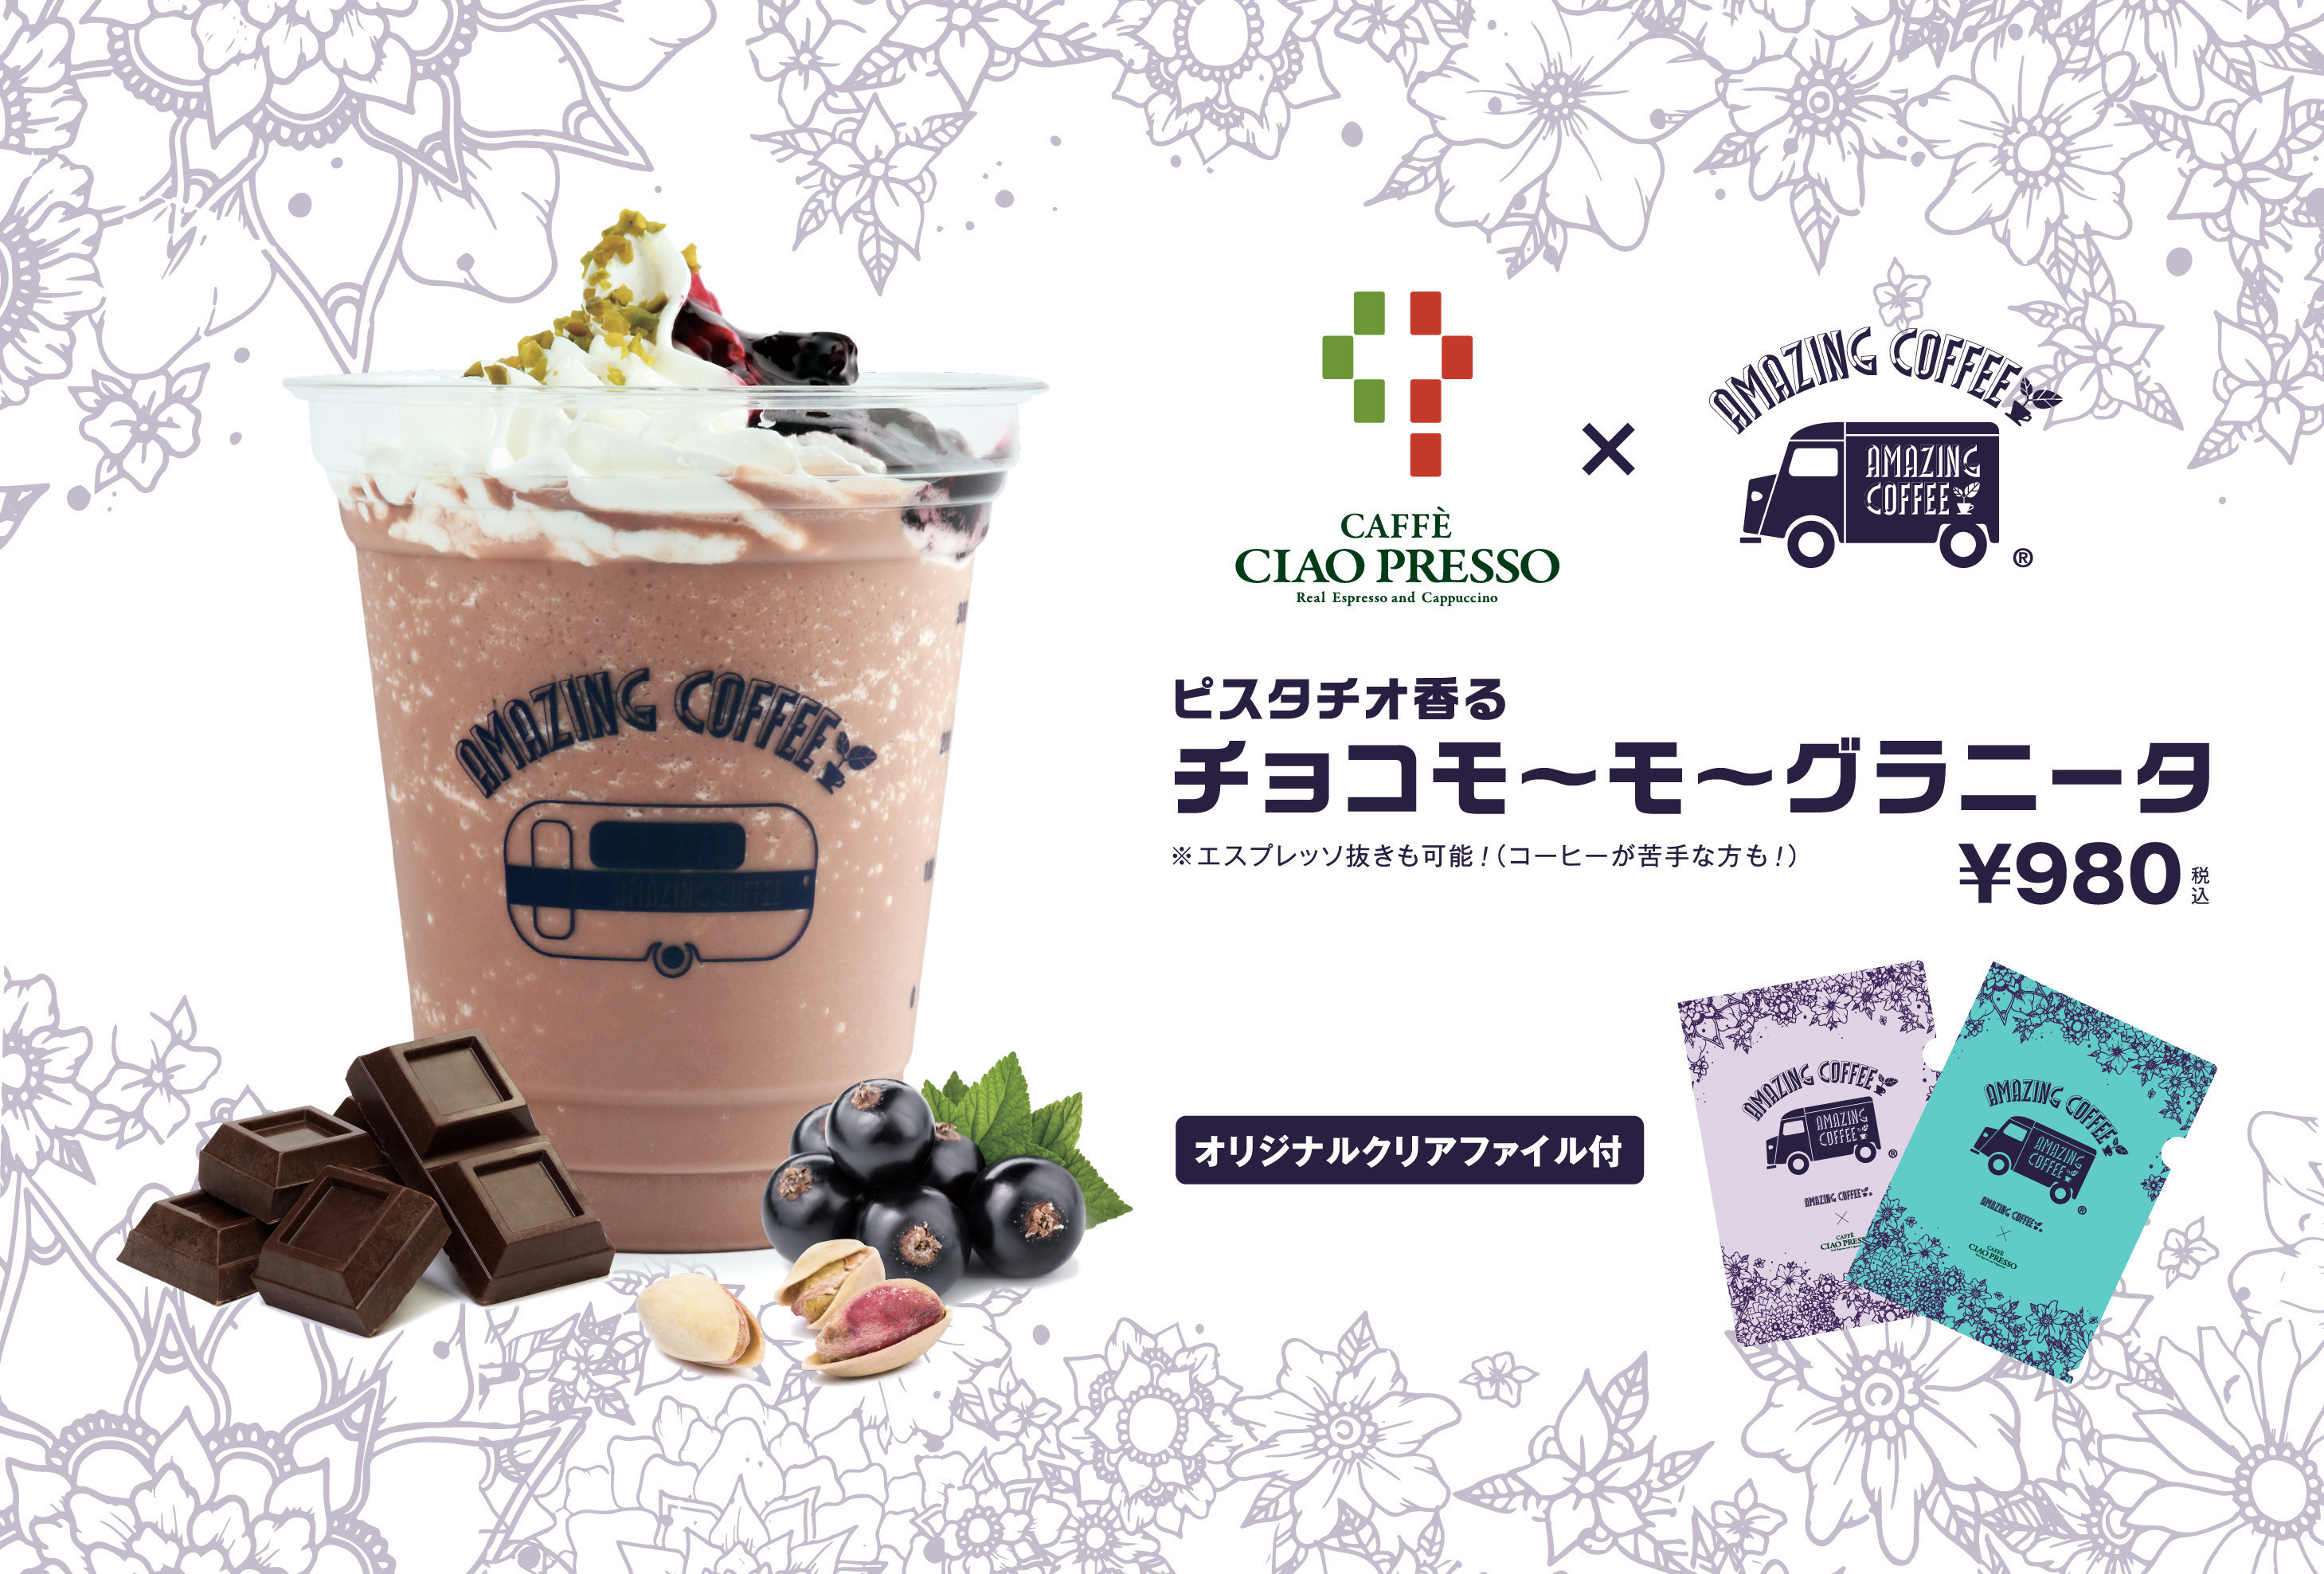 【CAFFE CIAO PRESSO×AMAZING COFFEEコラボ商品!!】✨『チョコモ〜モ〜グラニータ』を5月3日(水)より期間限定販売！☕